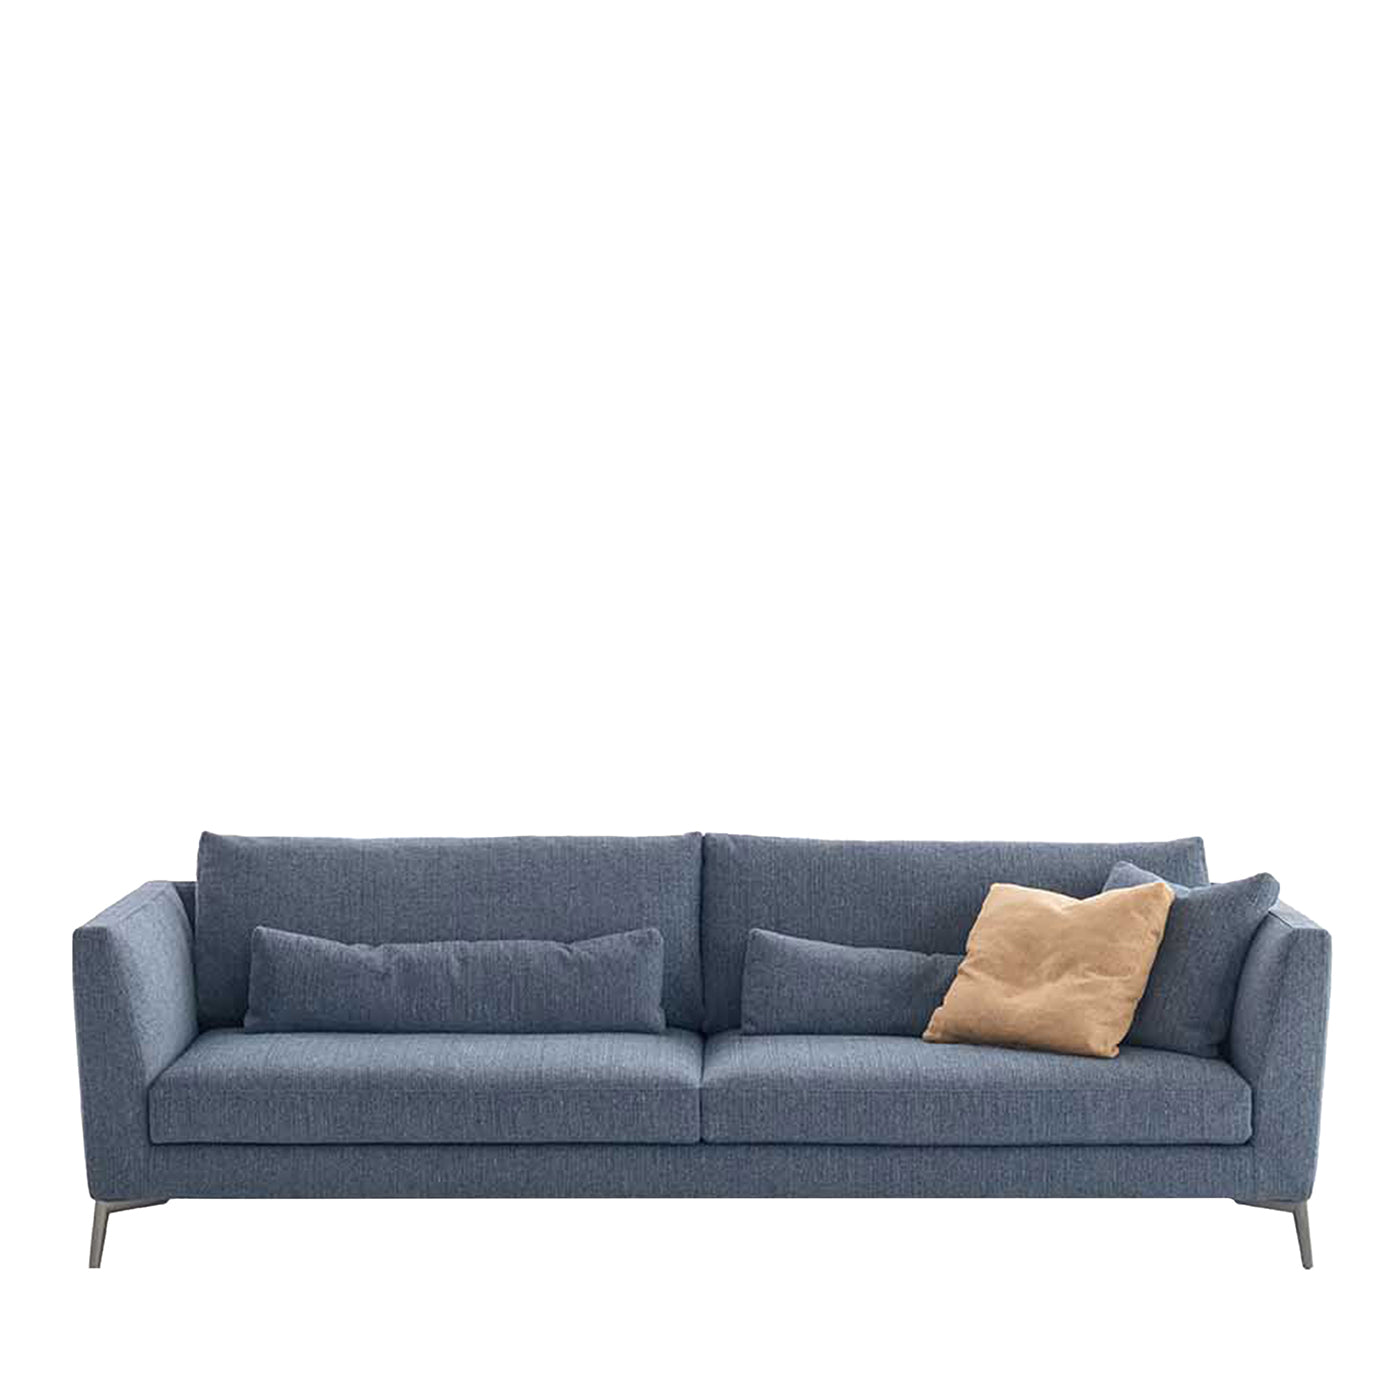 Eliot Blue Sofa by Giuseppe Bavuso - Main view